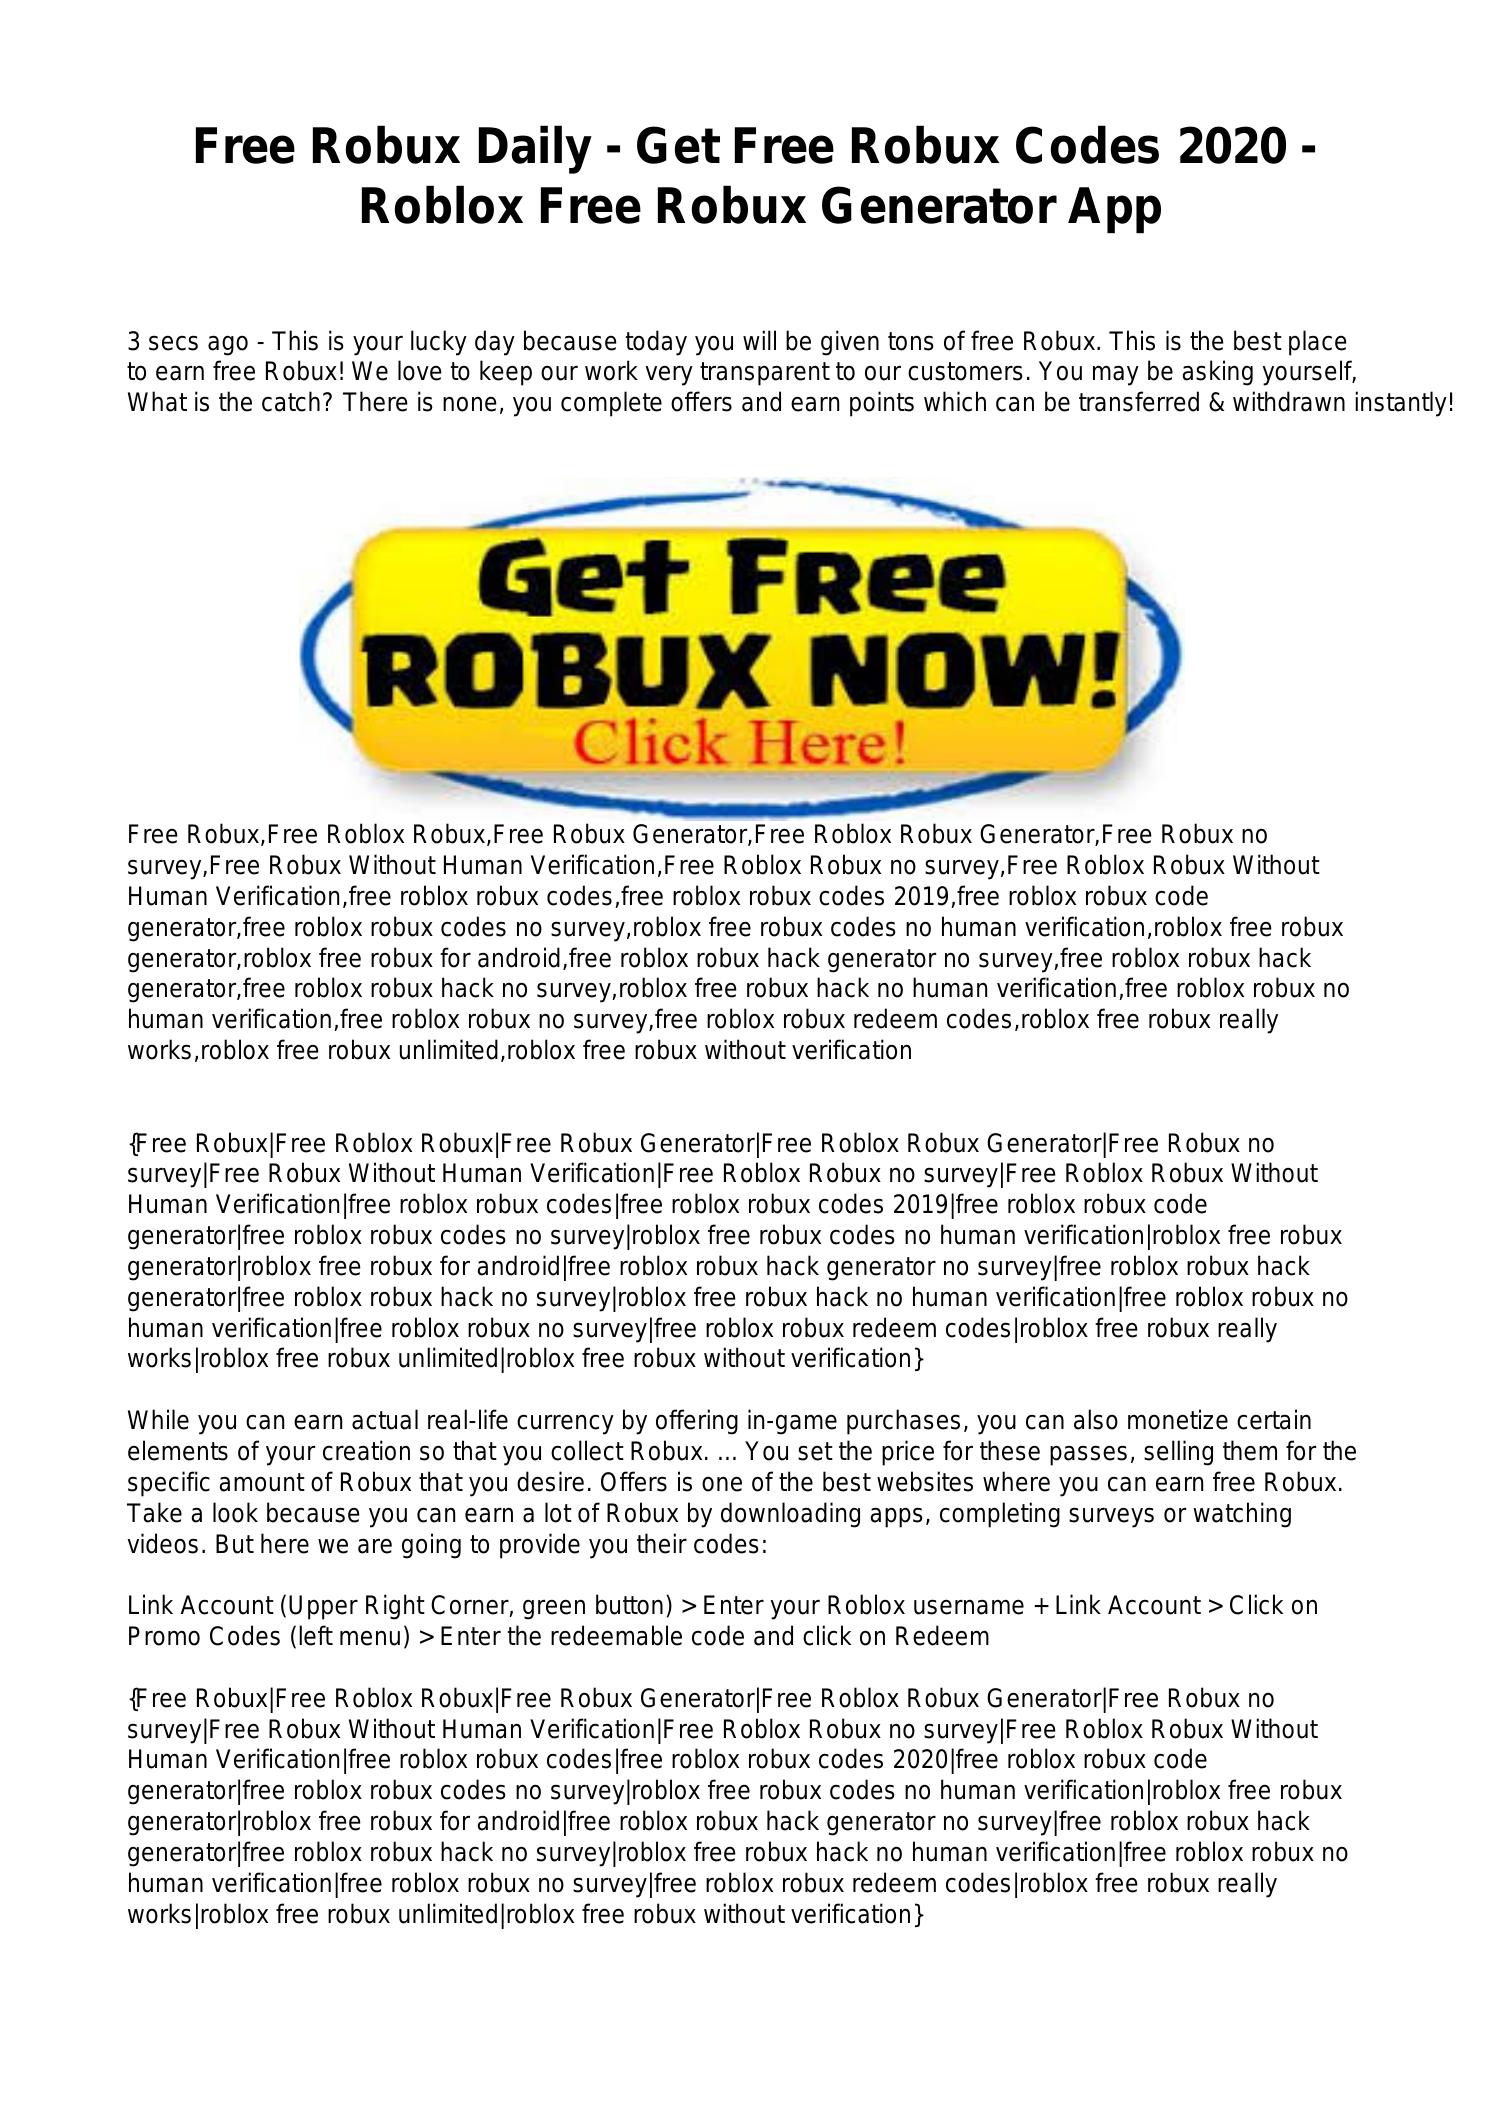 Redeem Code Roblox Free Robux 2021